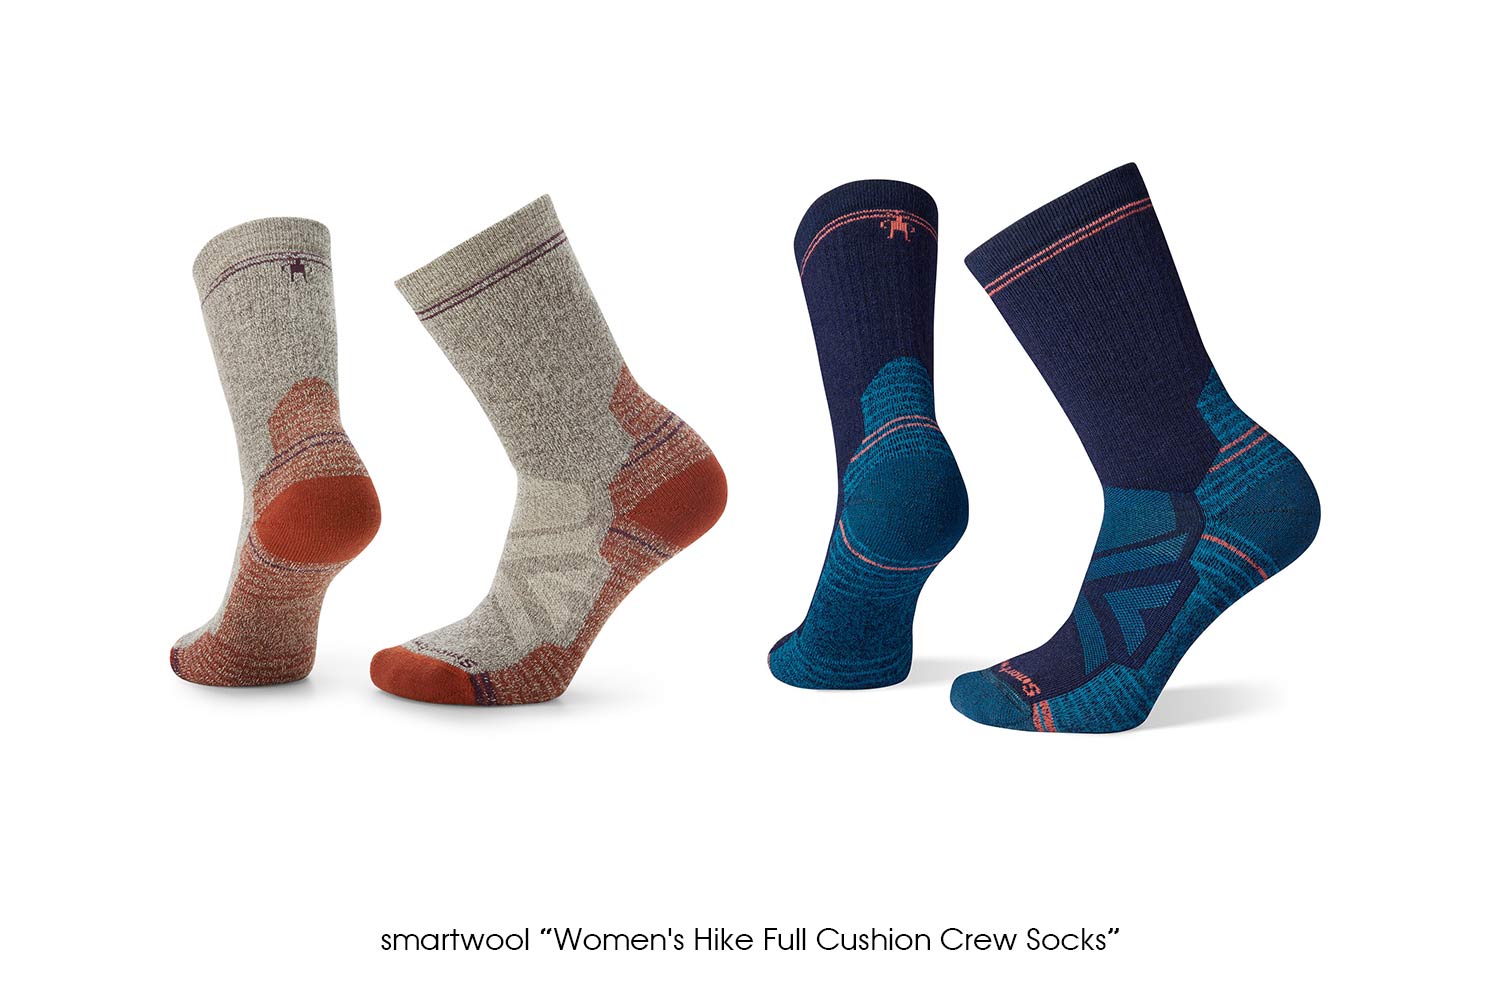 smartwool "Women's Hike Full Cushion Crew Socks"